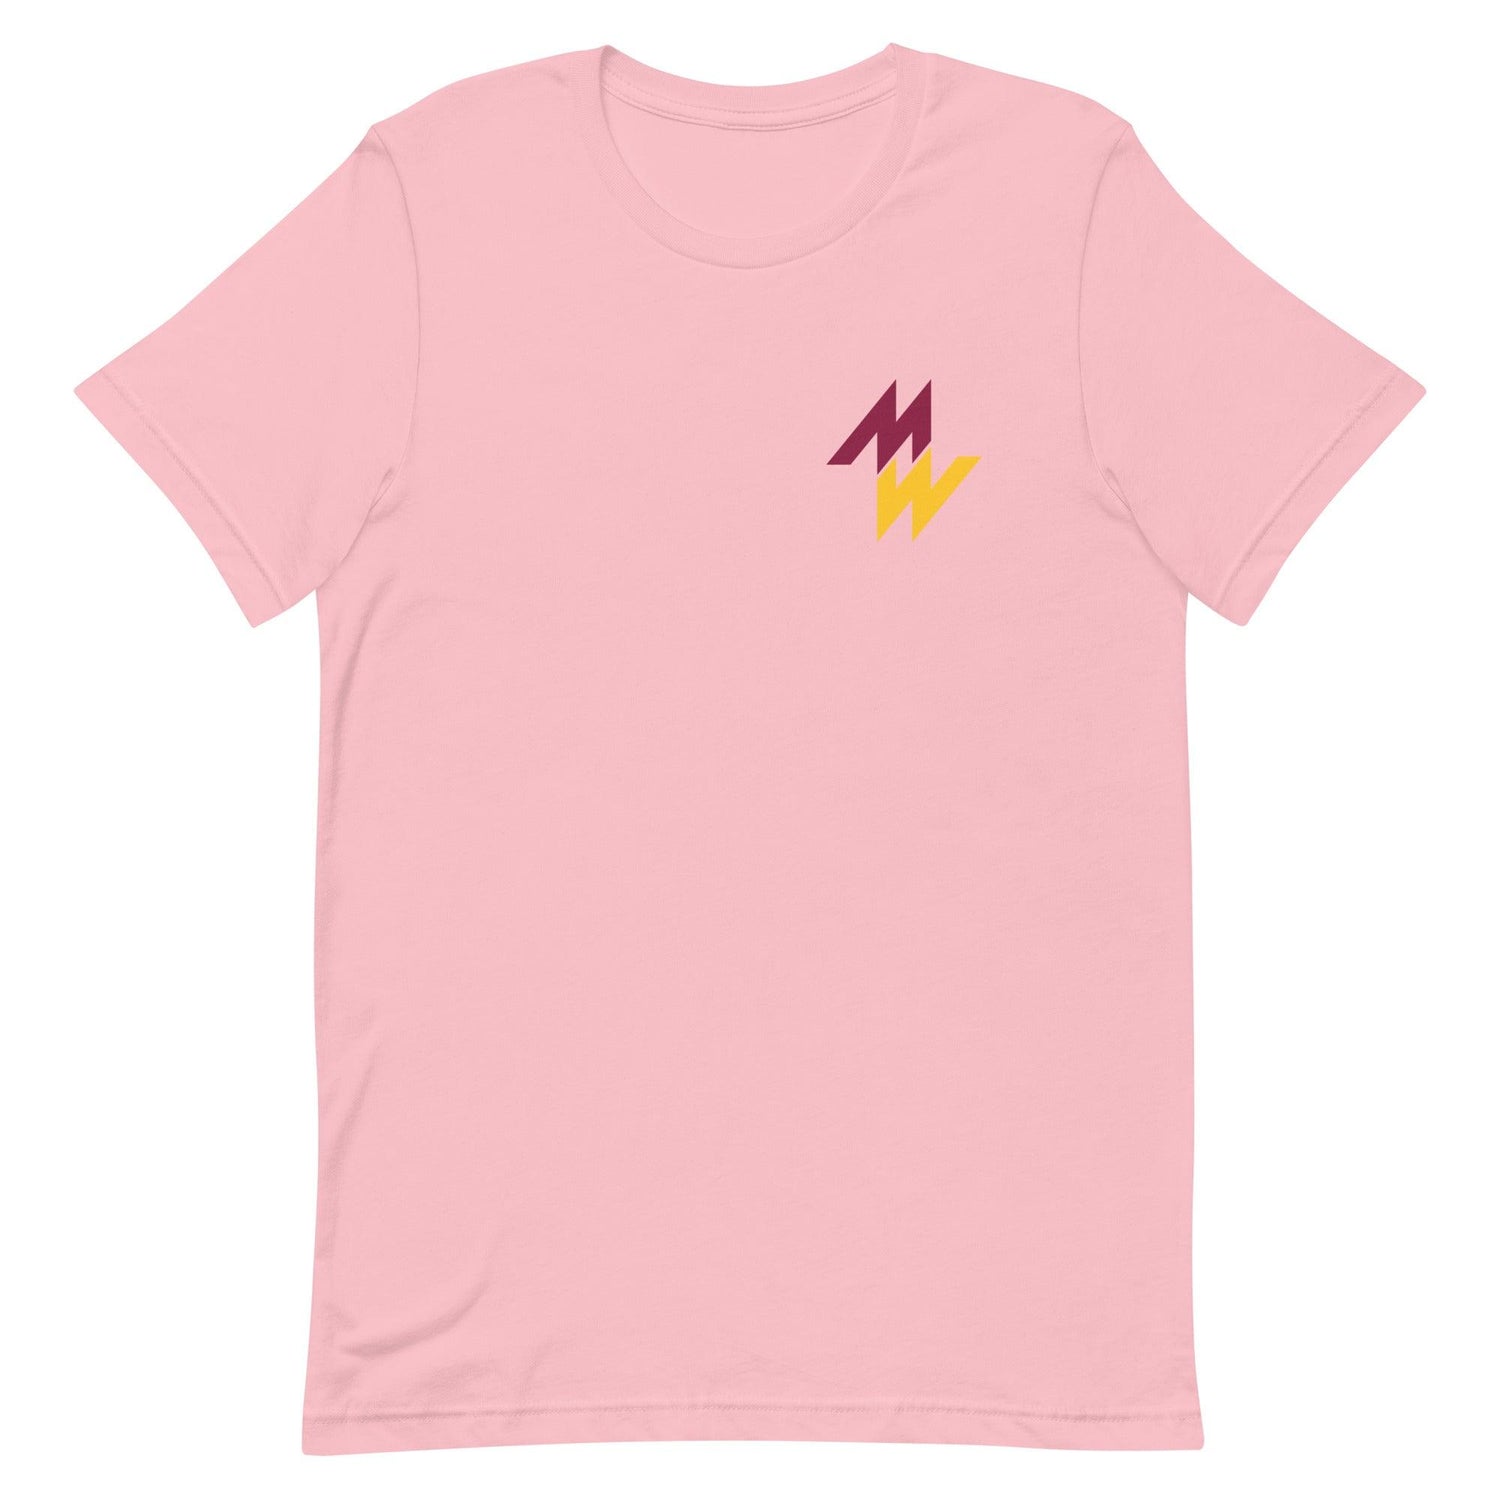 Macen Williams "Elite" t-shirt - Fan Arch